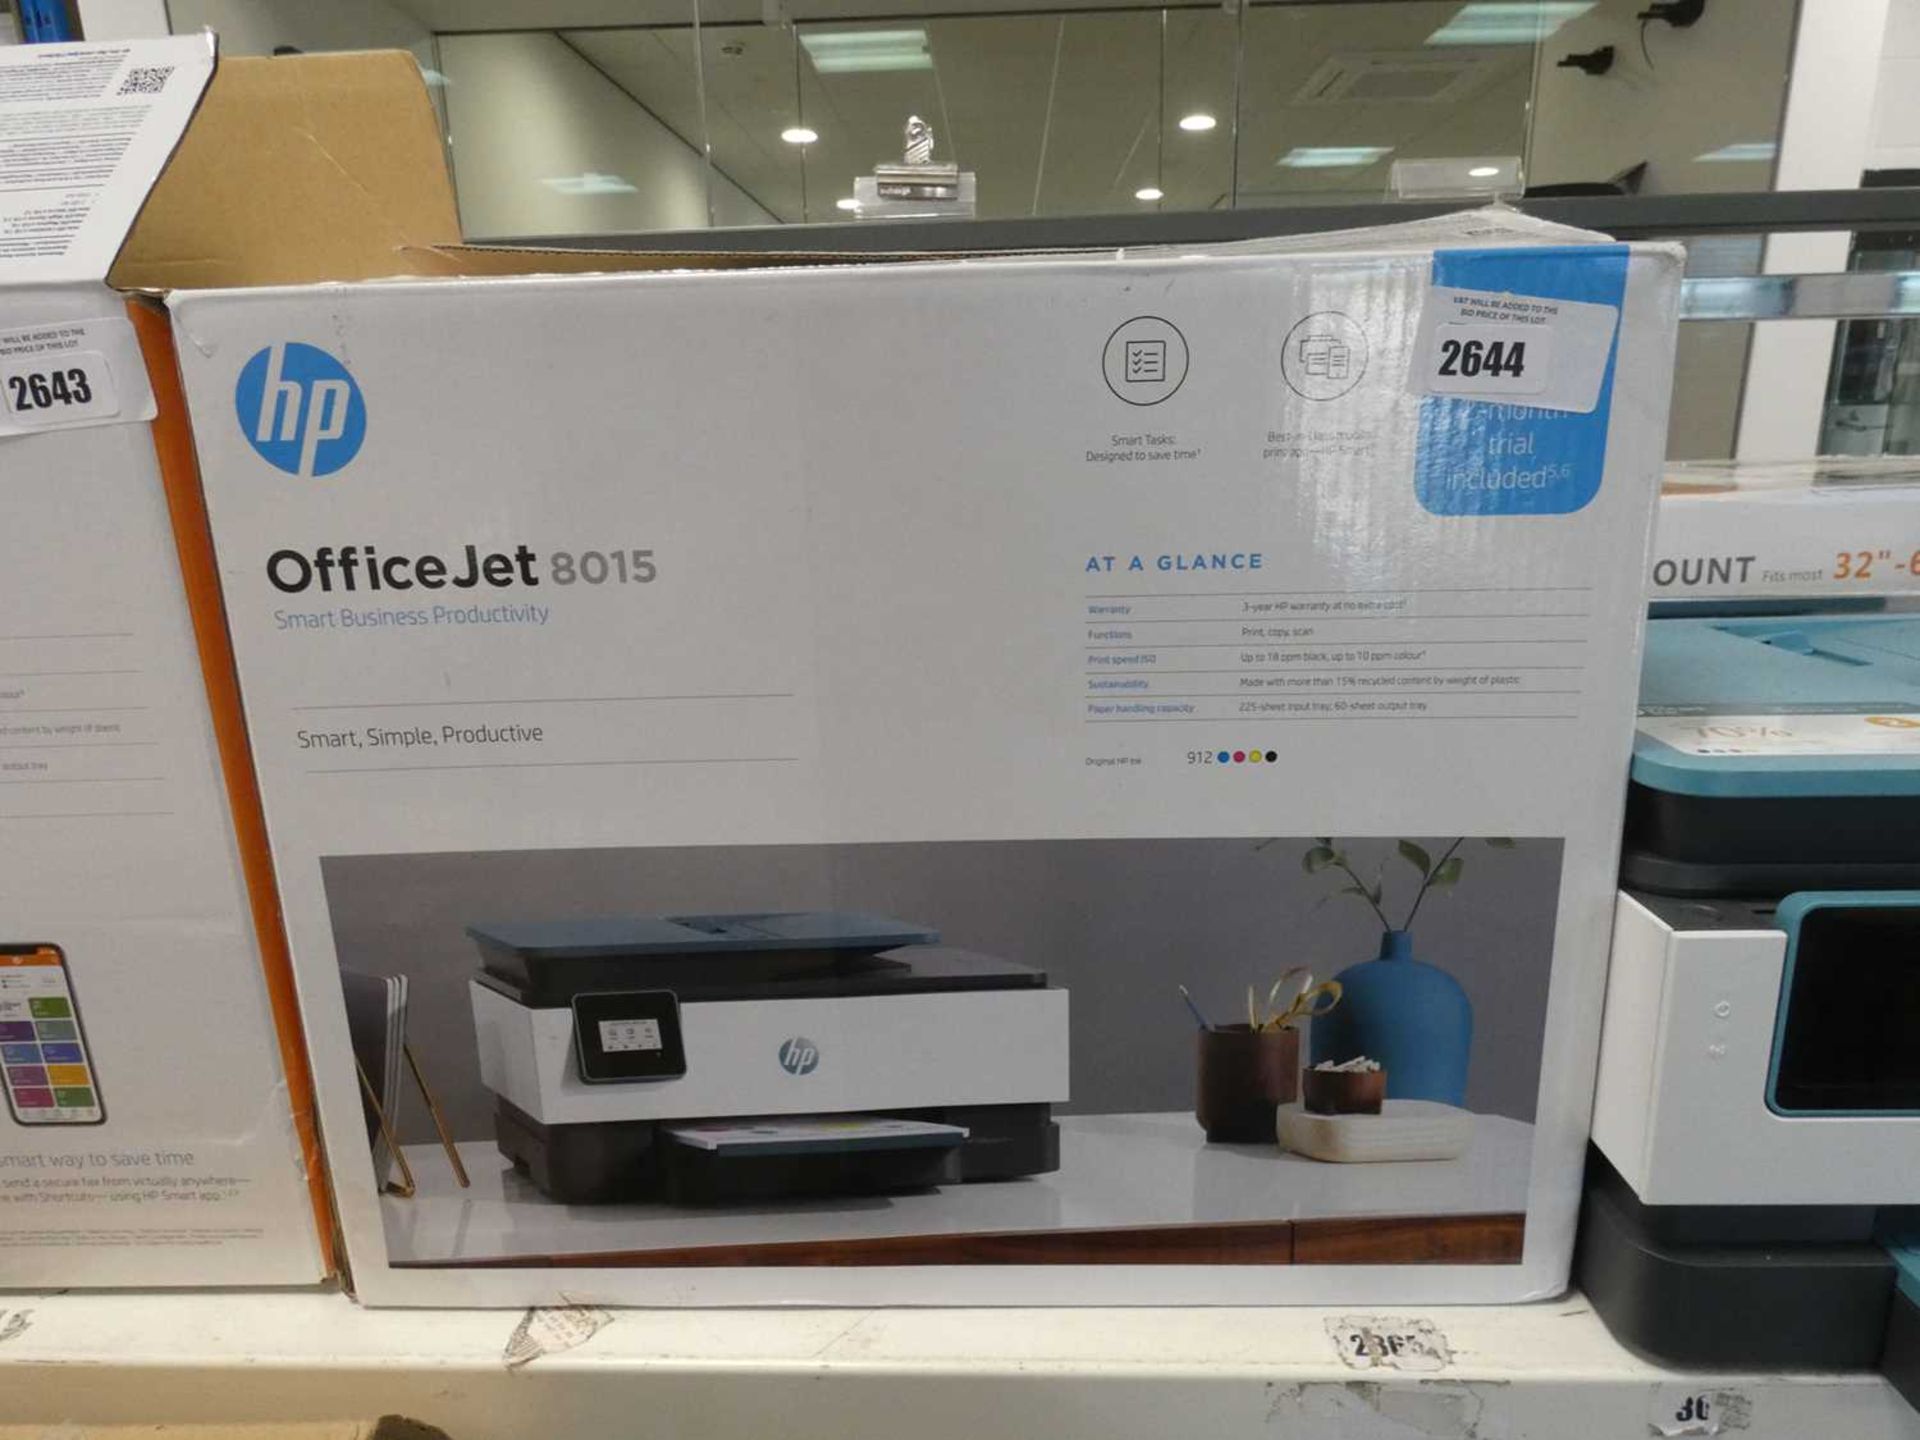 +VAT HP Officejet 8015 printer in box